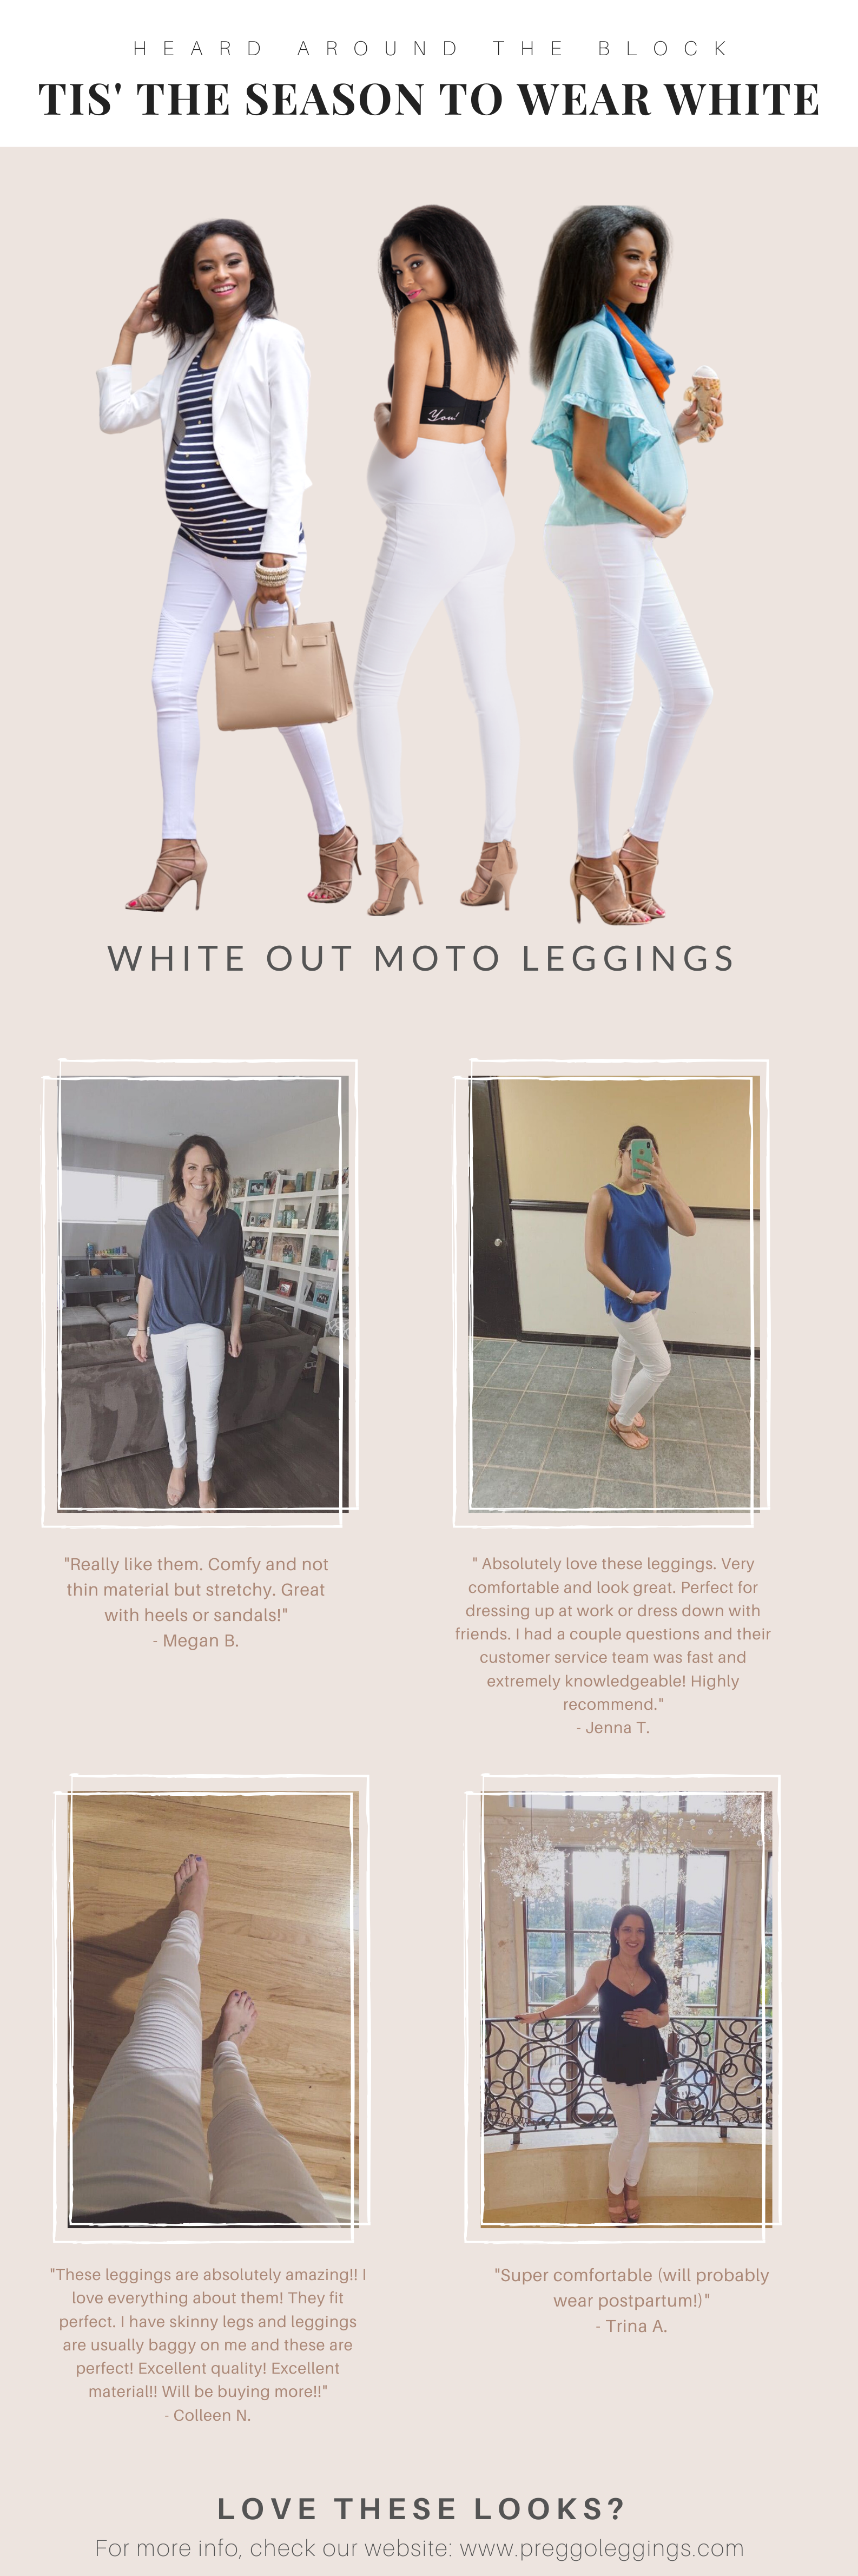 White Out Moto Leggings Reviews